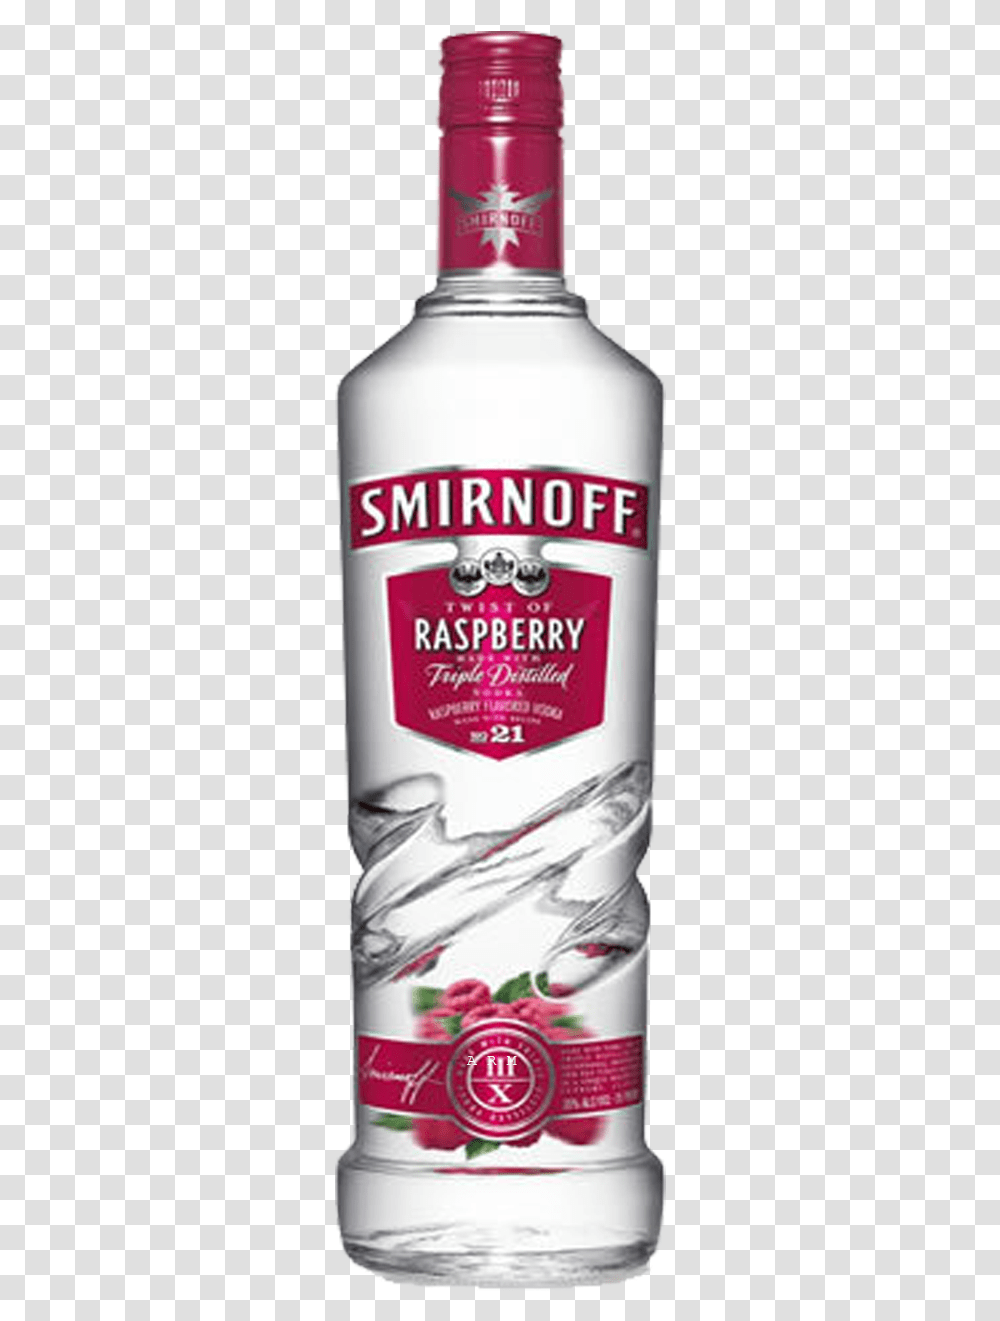 Smirnoff Twisted Raspberry, Liquor, Alcohol, Beverage, Absinthe Transparent Png